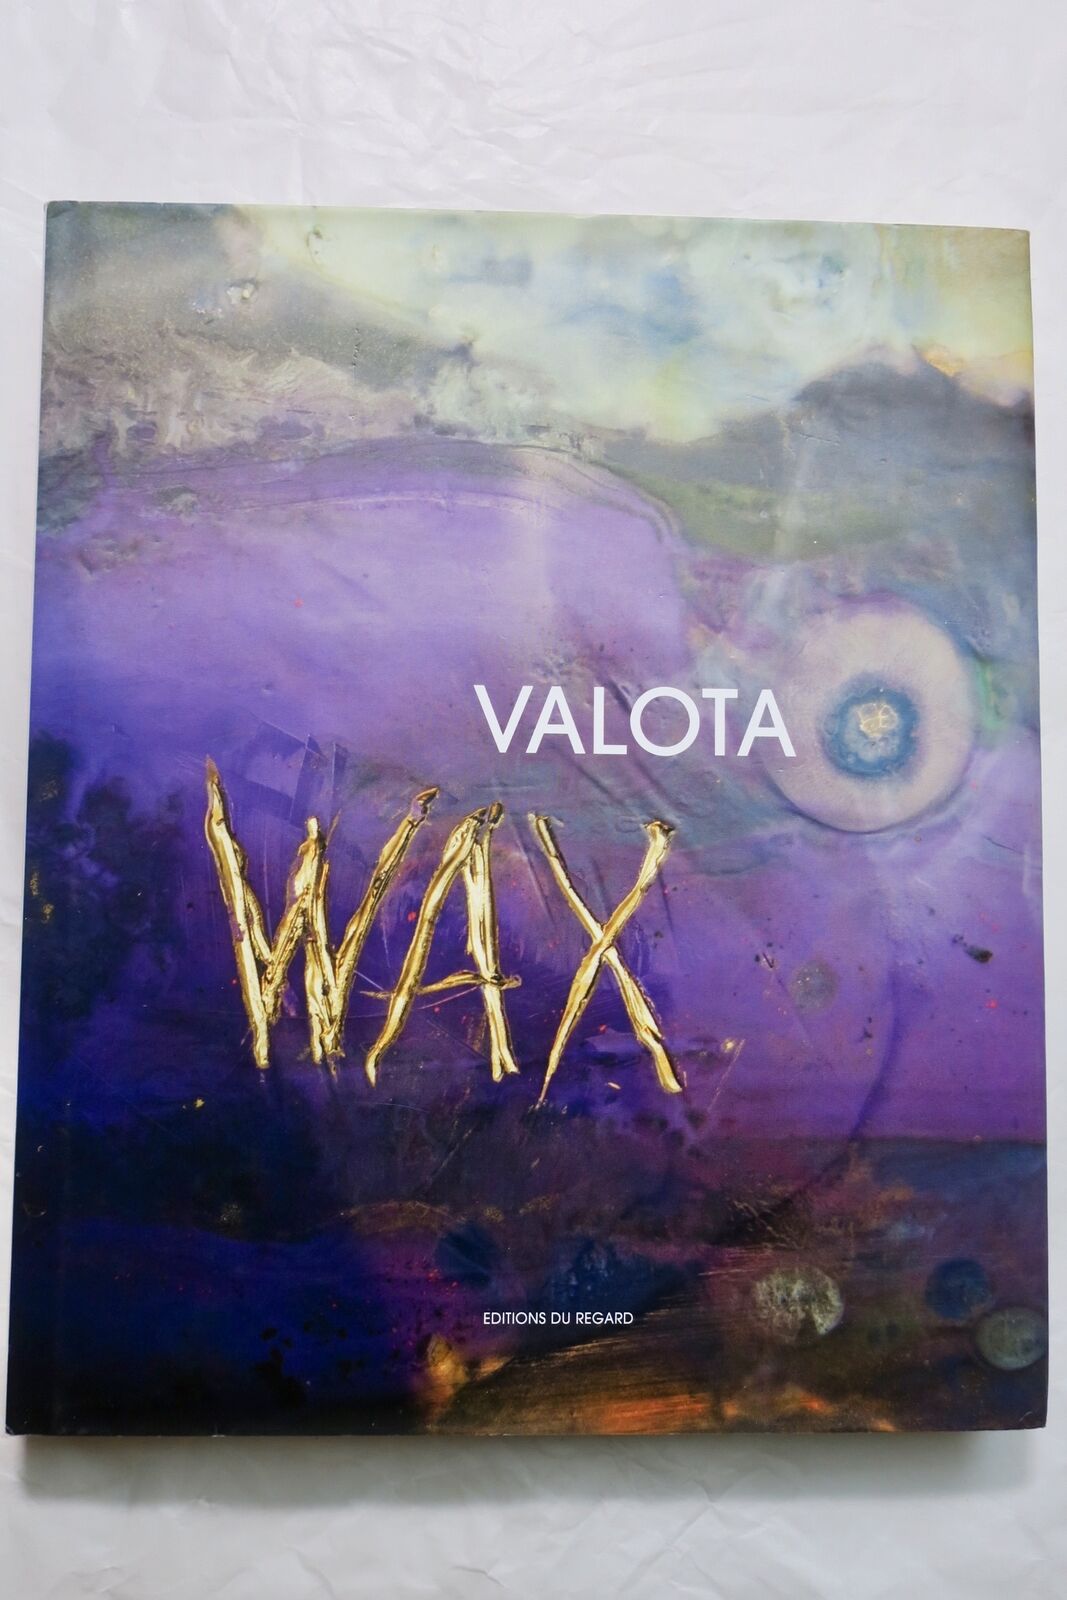 Valota - WAX